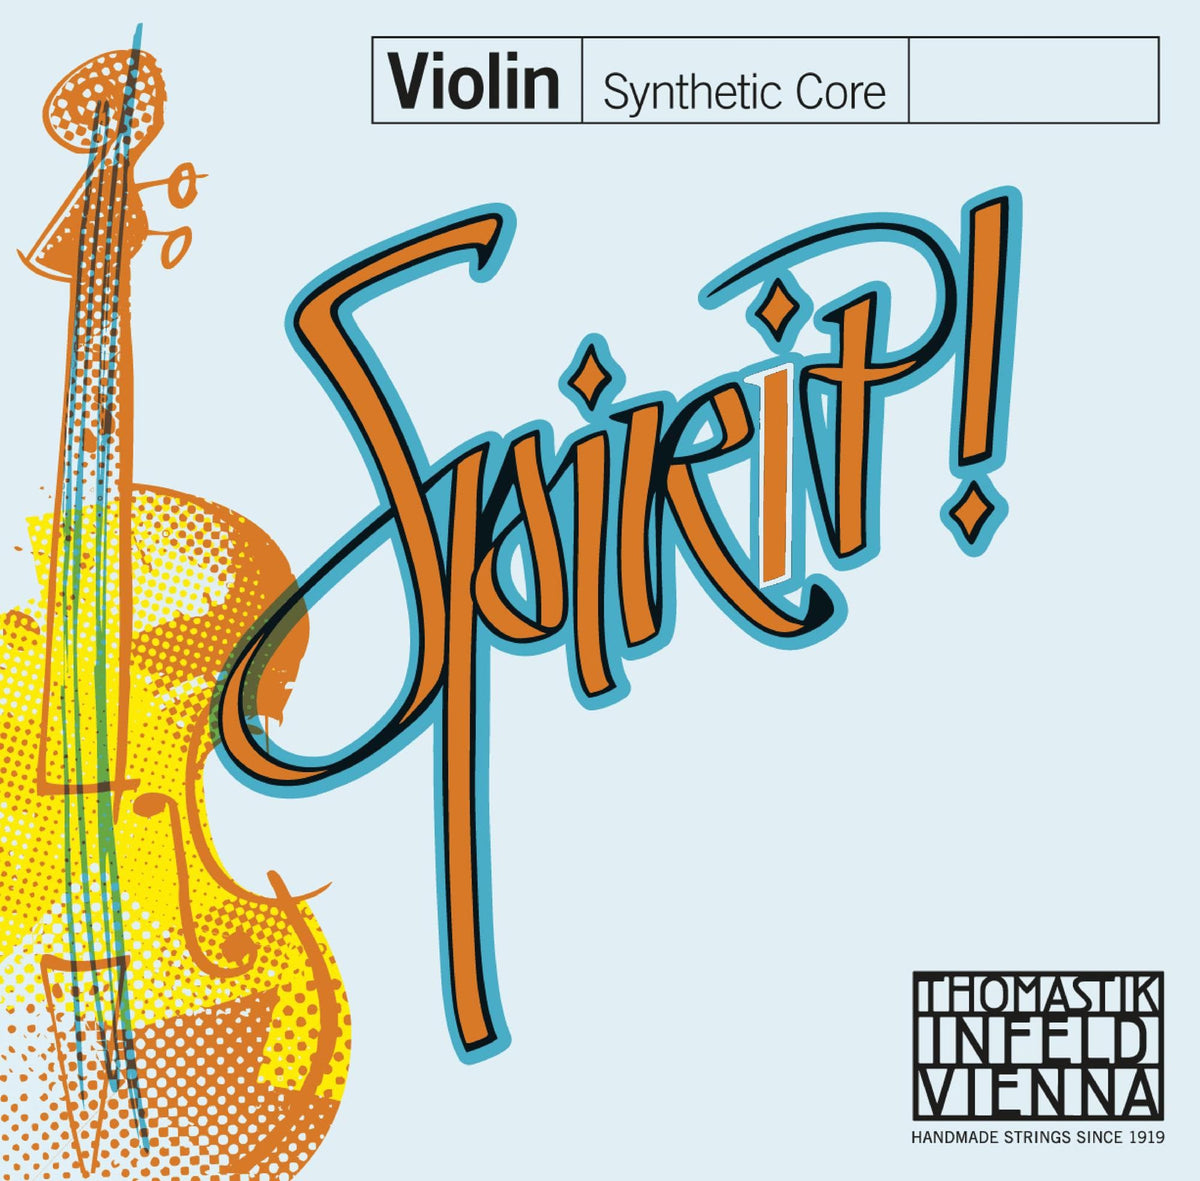 TI Spirit Violin D String